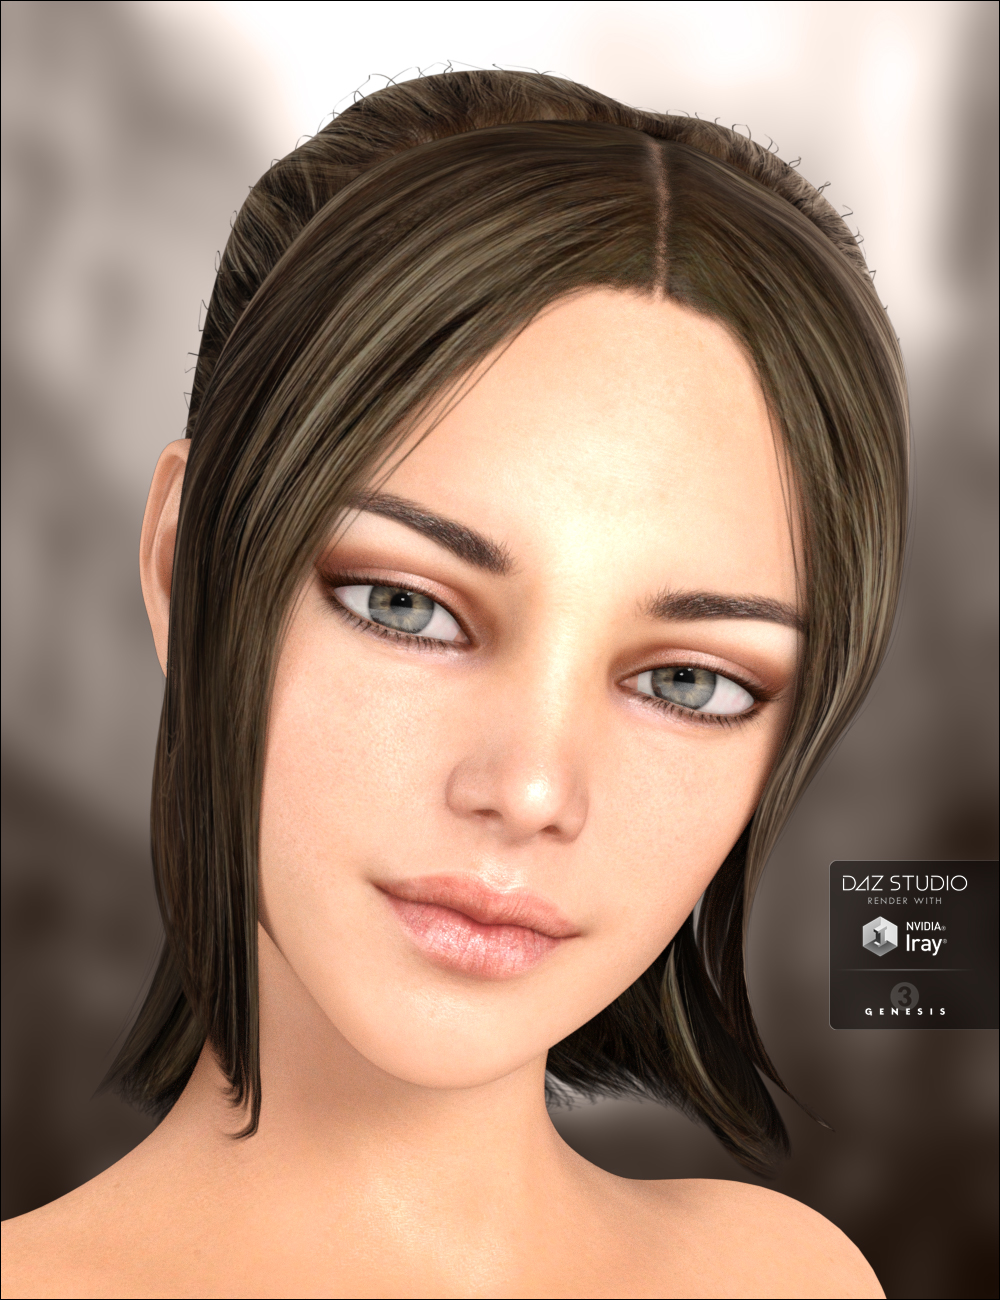 Claudette Hair by: DarkStarBurningMindVision G.D.S., 3D Models by Daz 3D